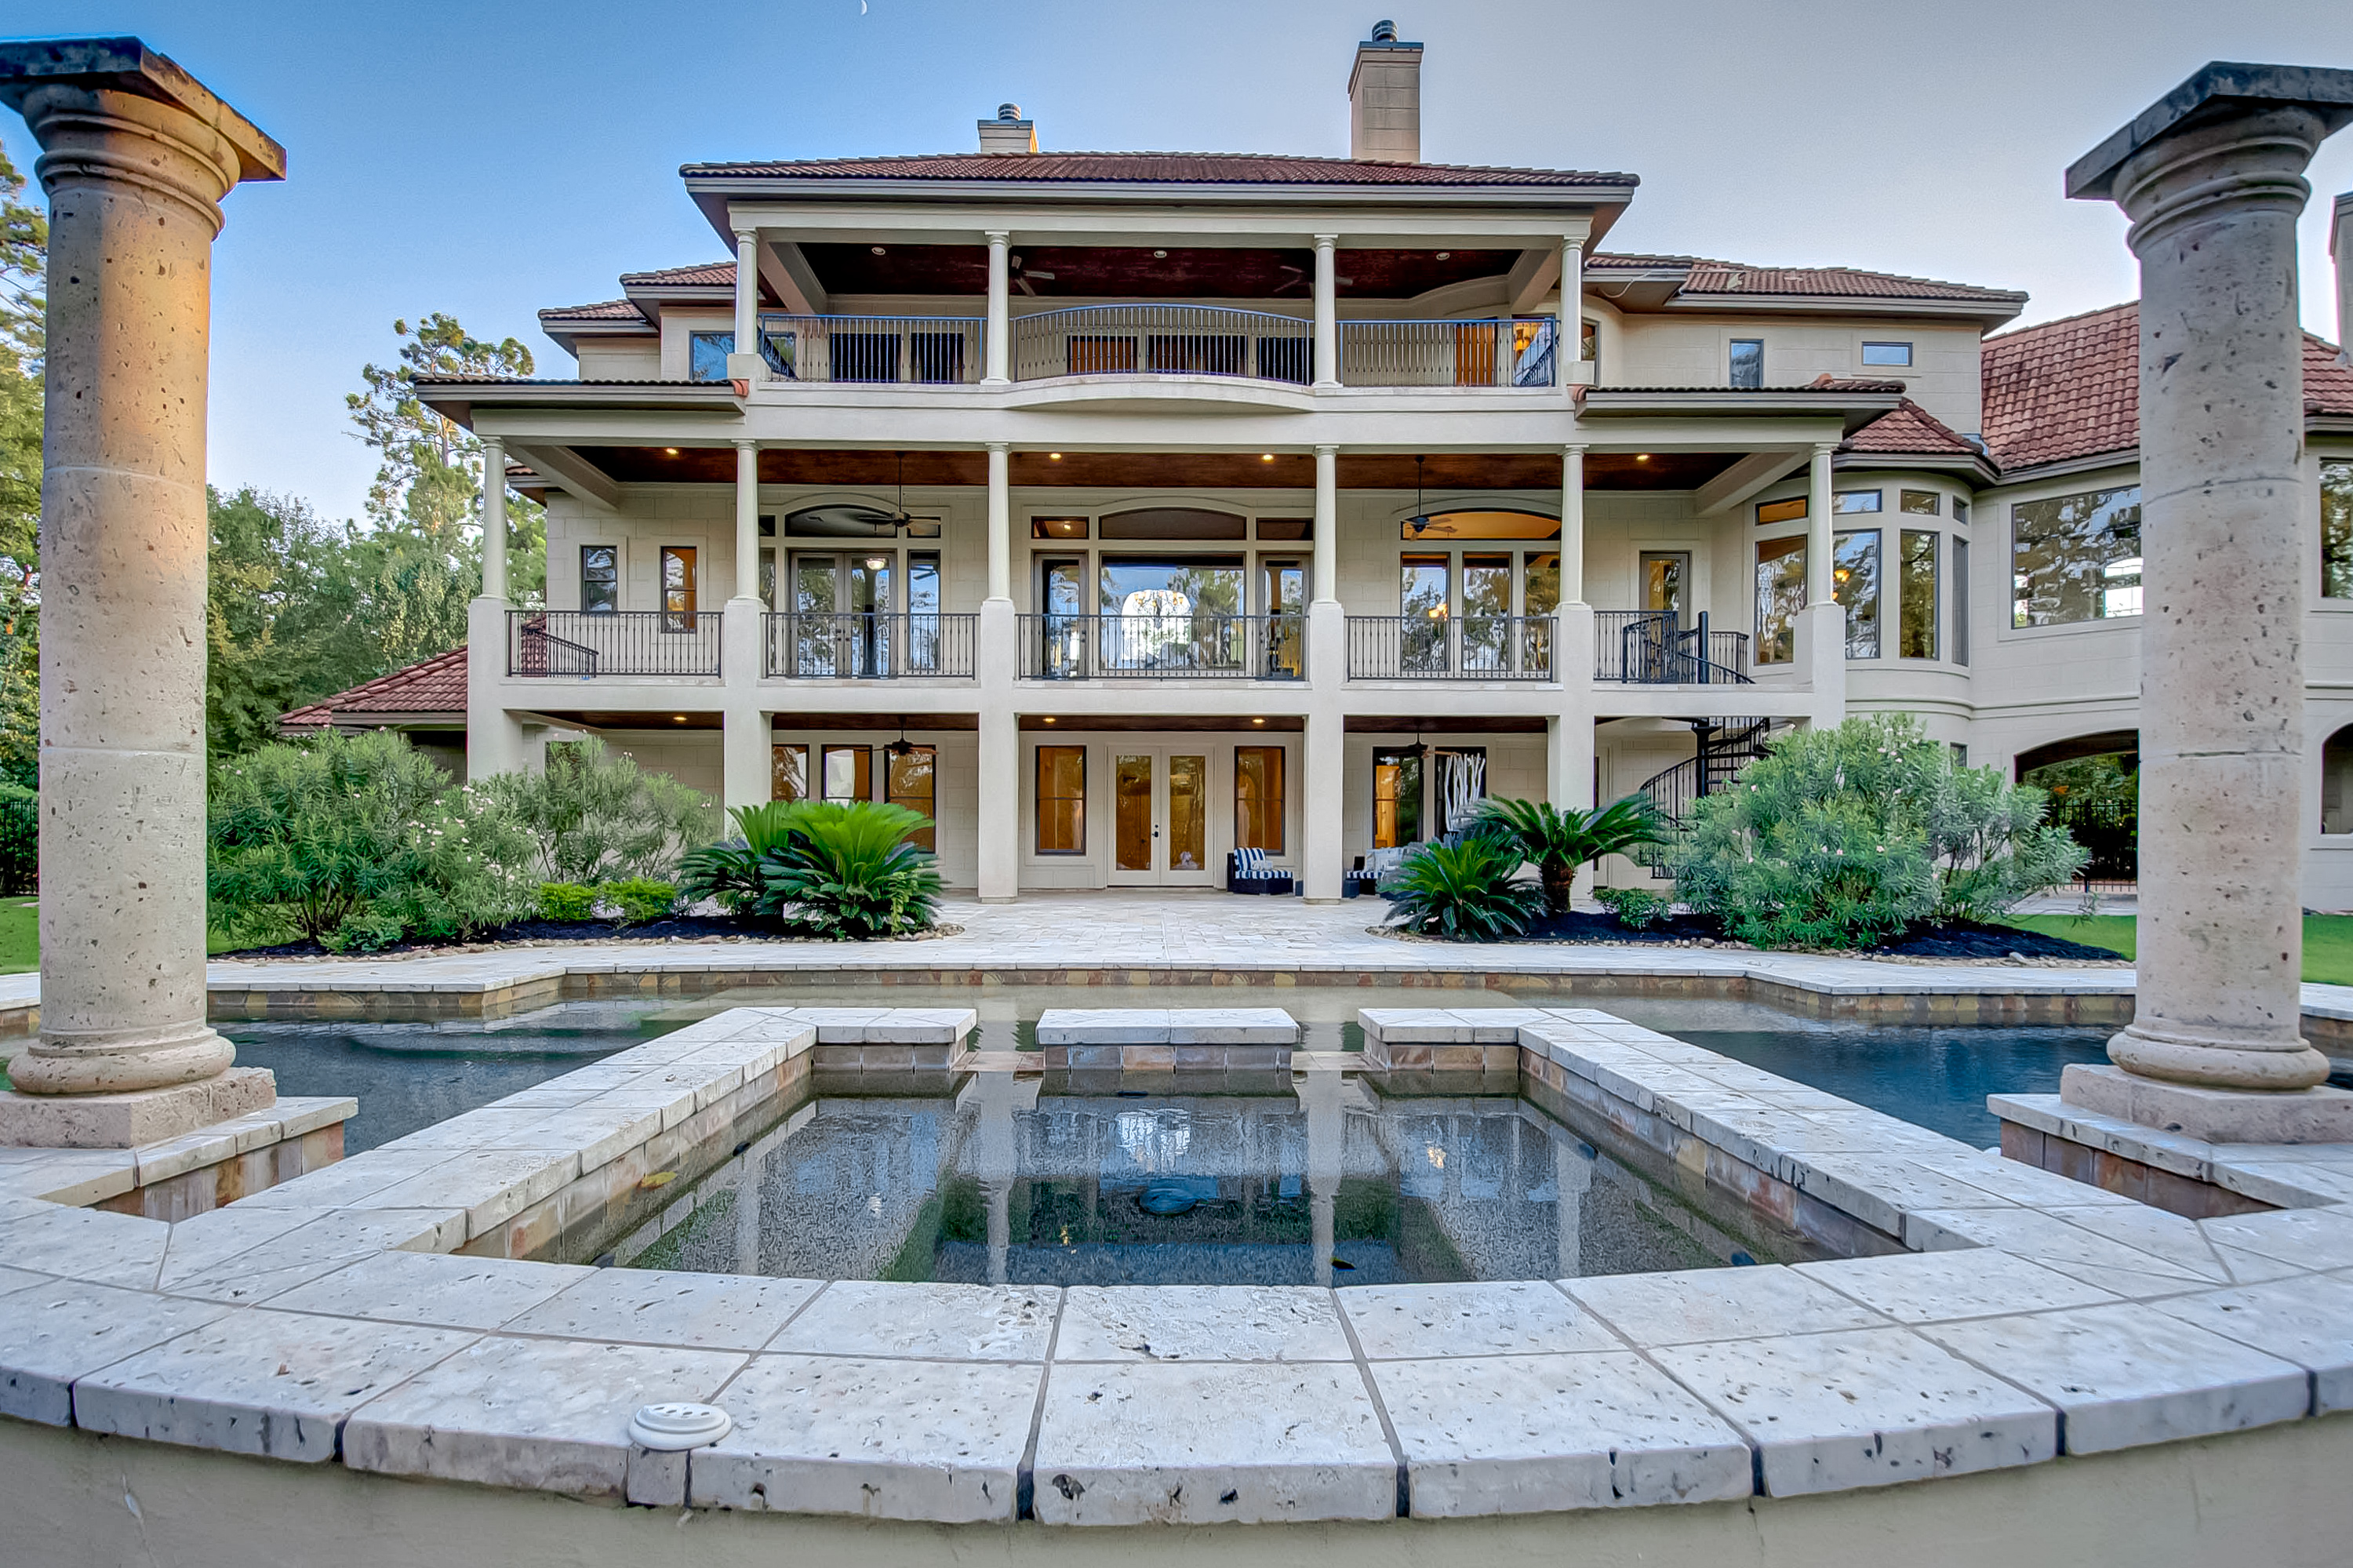 Regency Oaks - The Woodlands, Texas - Luxury No-Reserve Auction November 21st